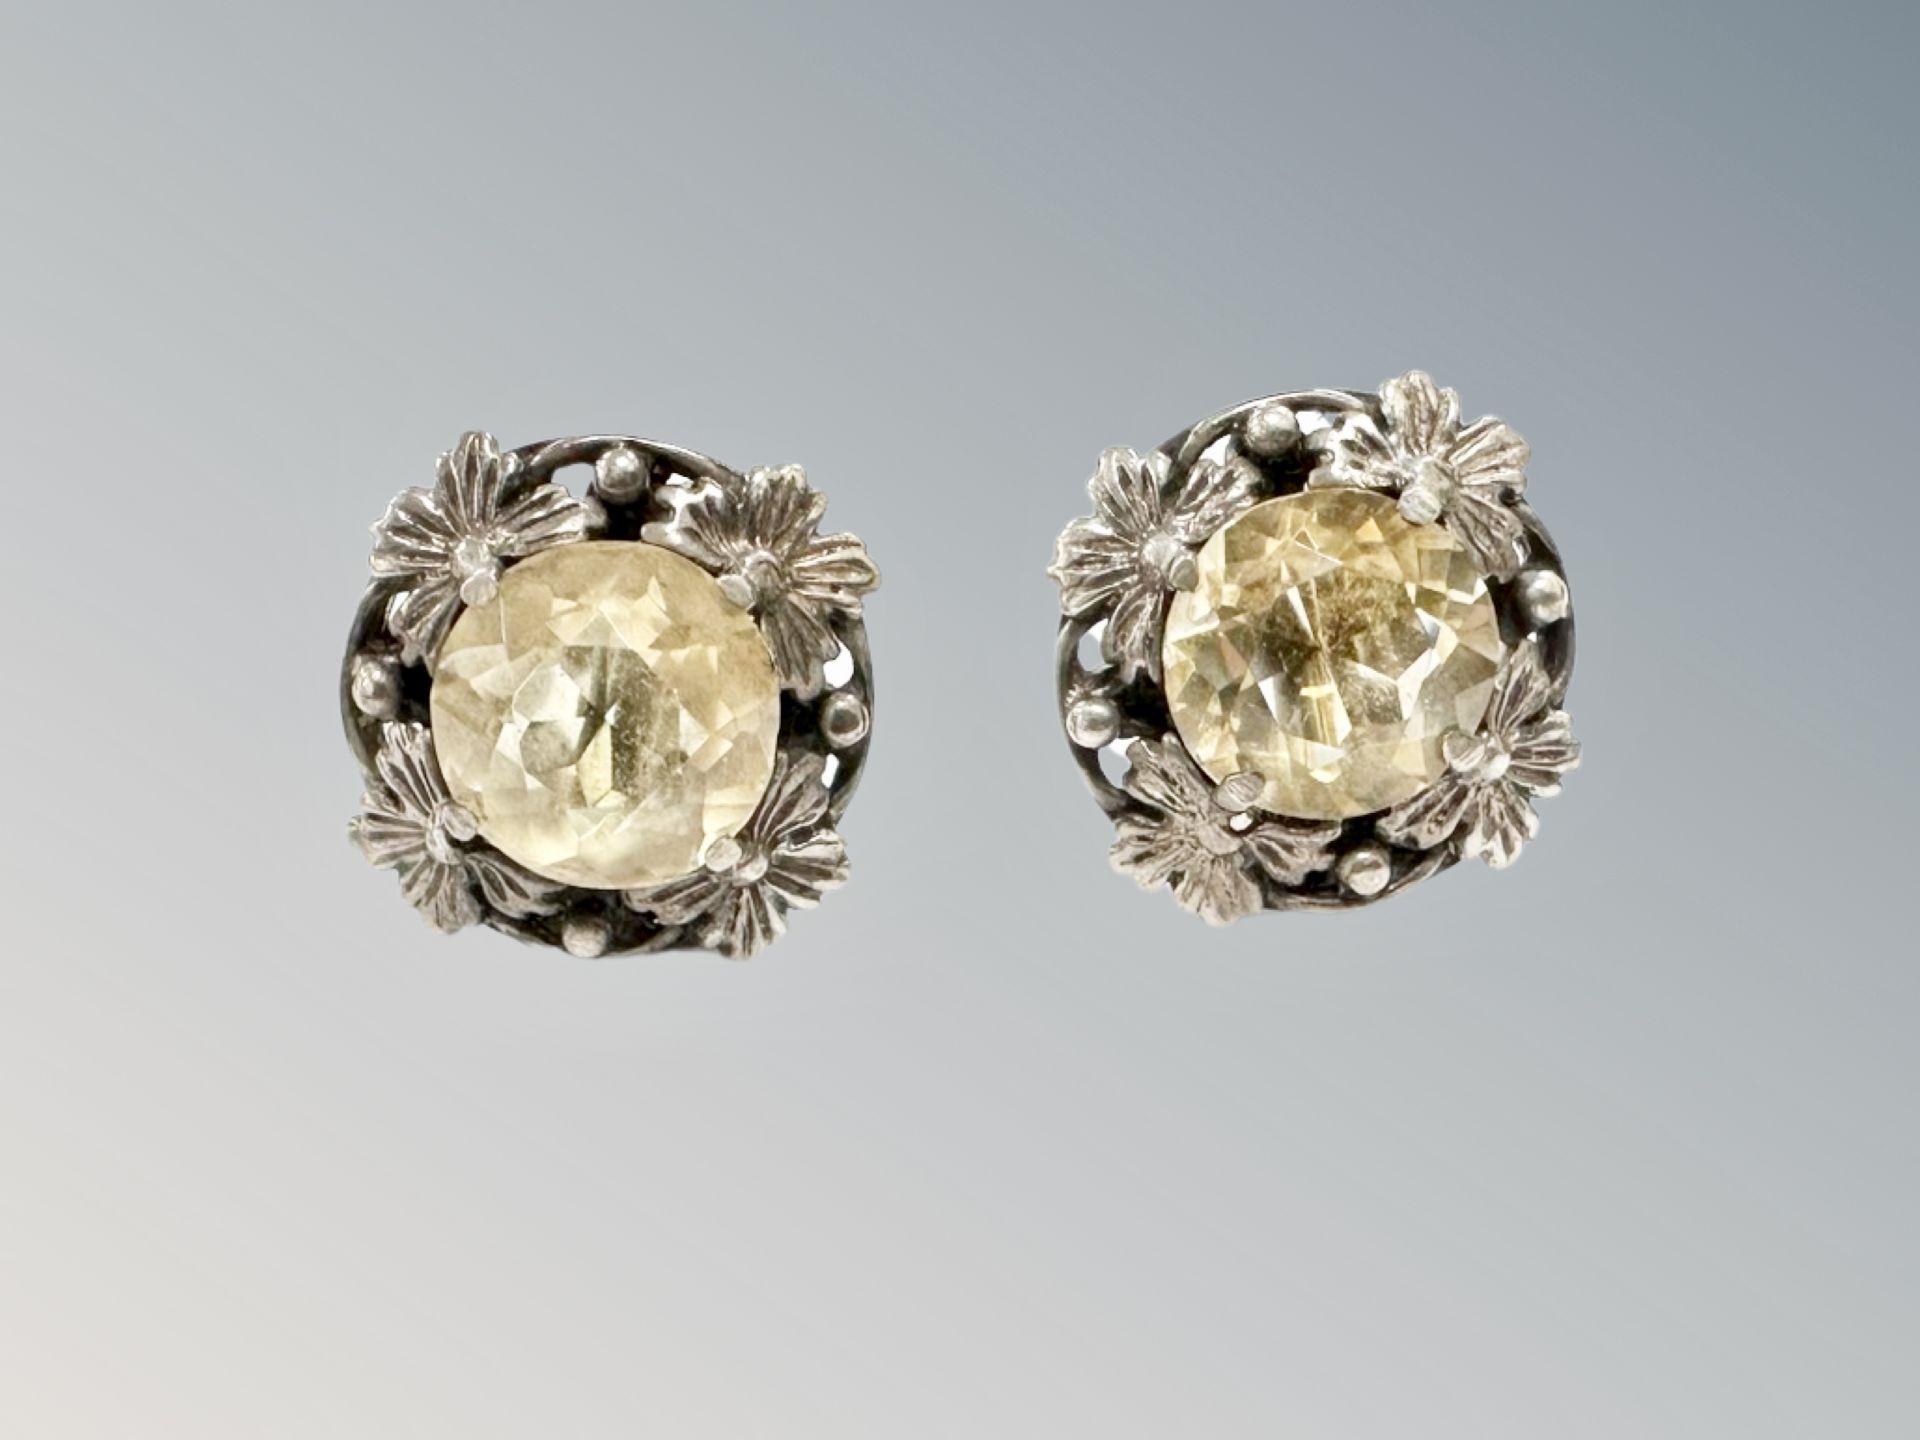 A pair of silver citrine earrings